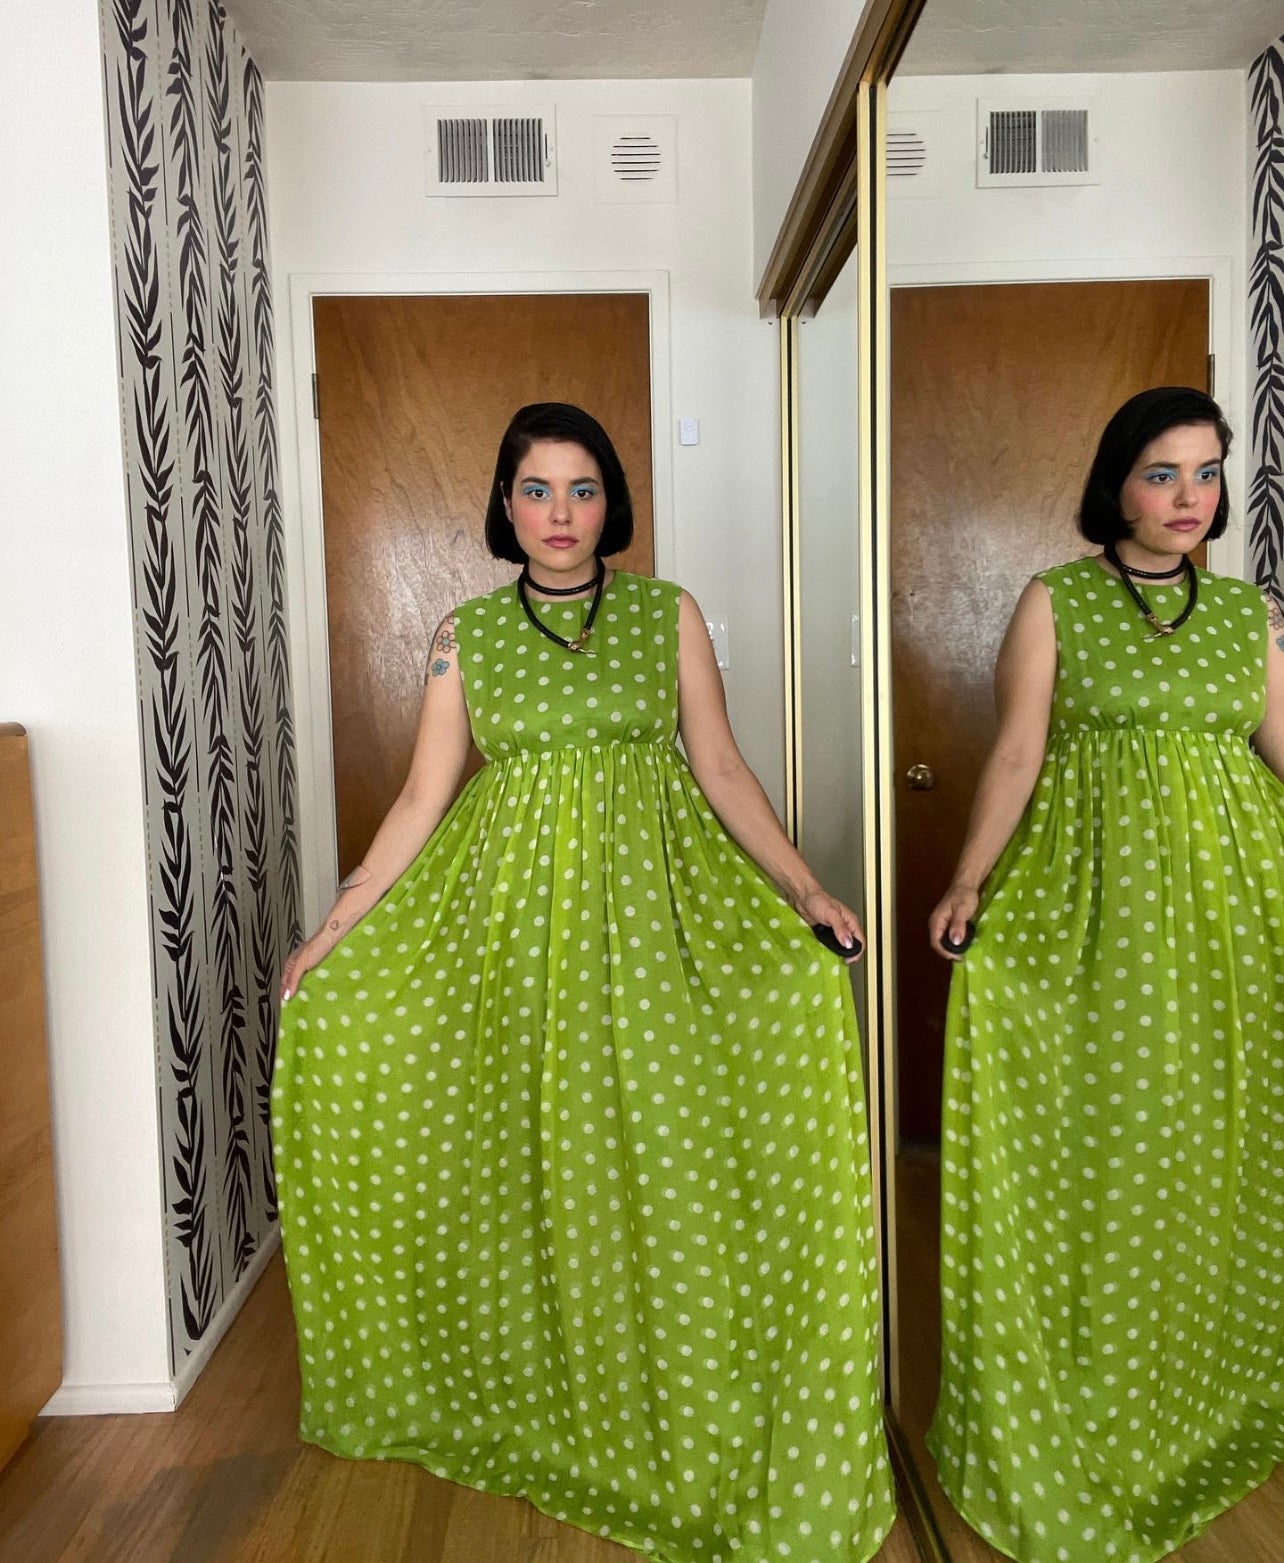 Vintage 60s / 70s Polka Dot Chiffon Empire Waist Maxi Dress fits sizes S-M